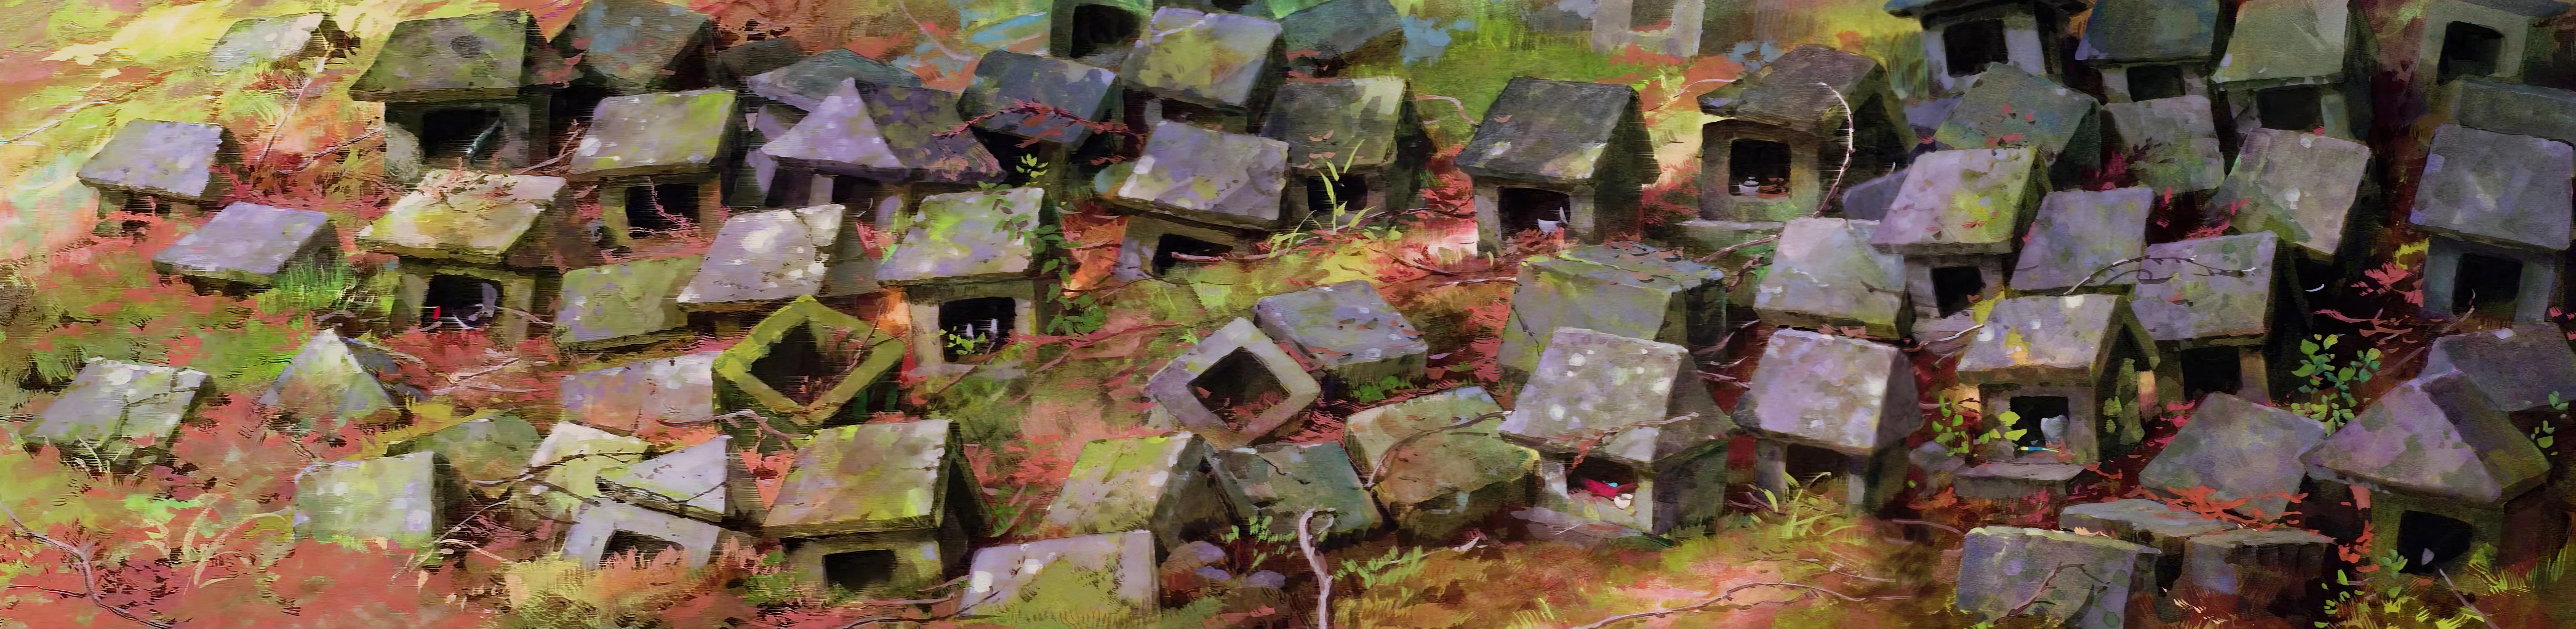 Awesome Studio Ghibli Ultra Widescreen Image